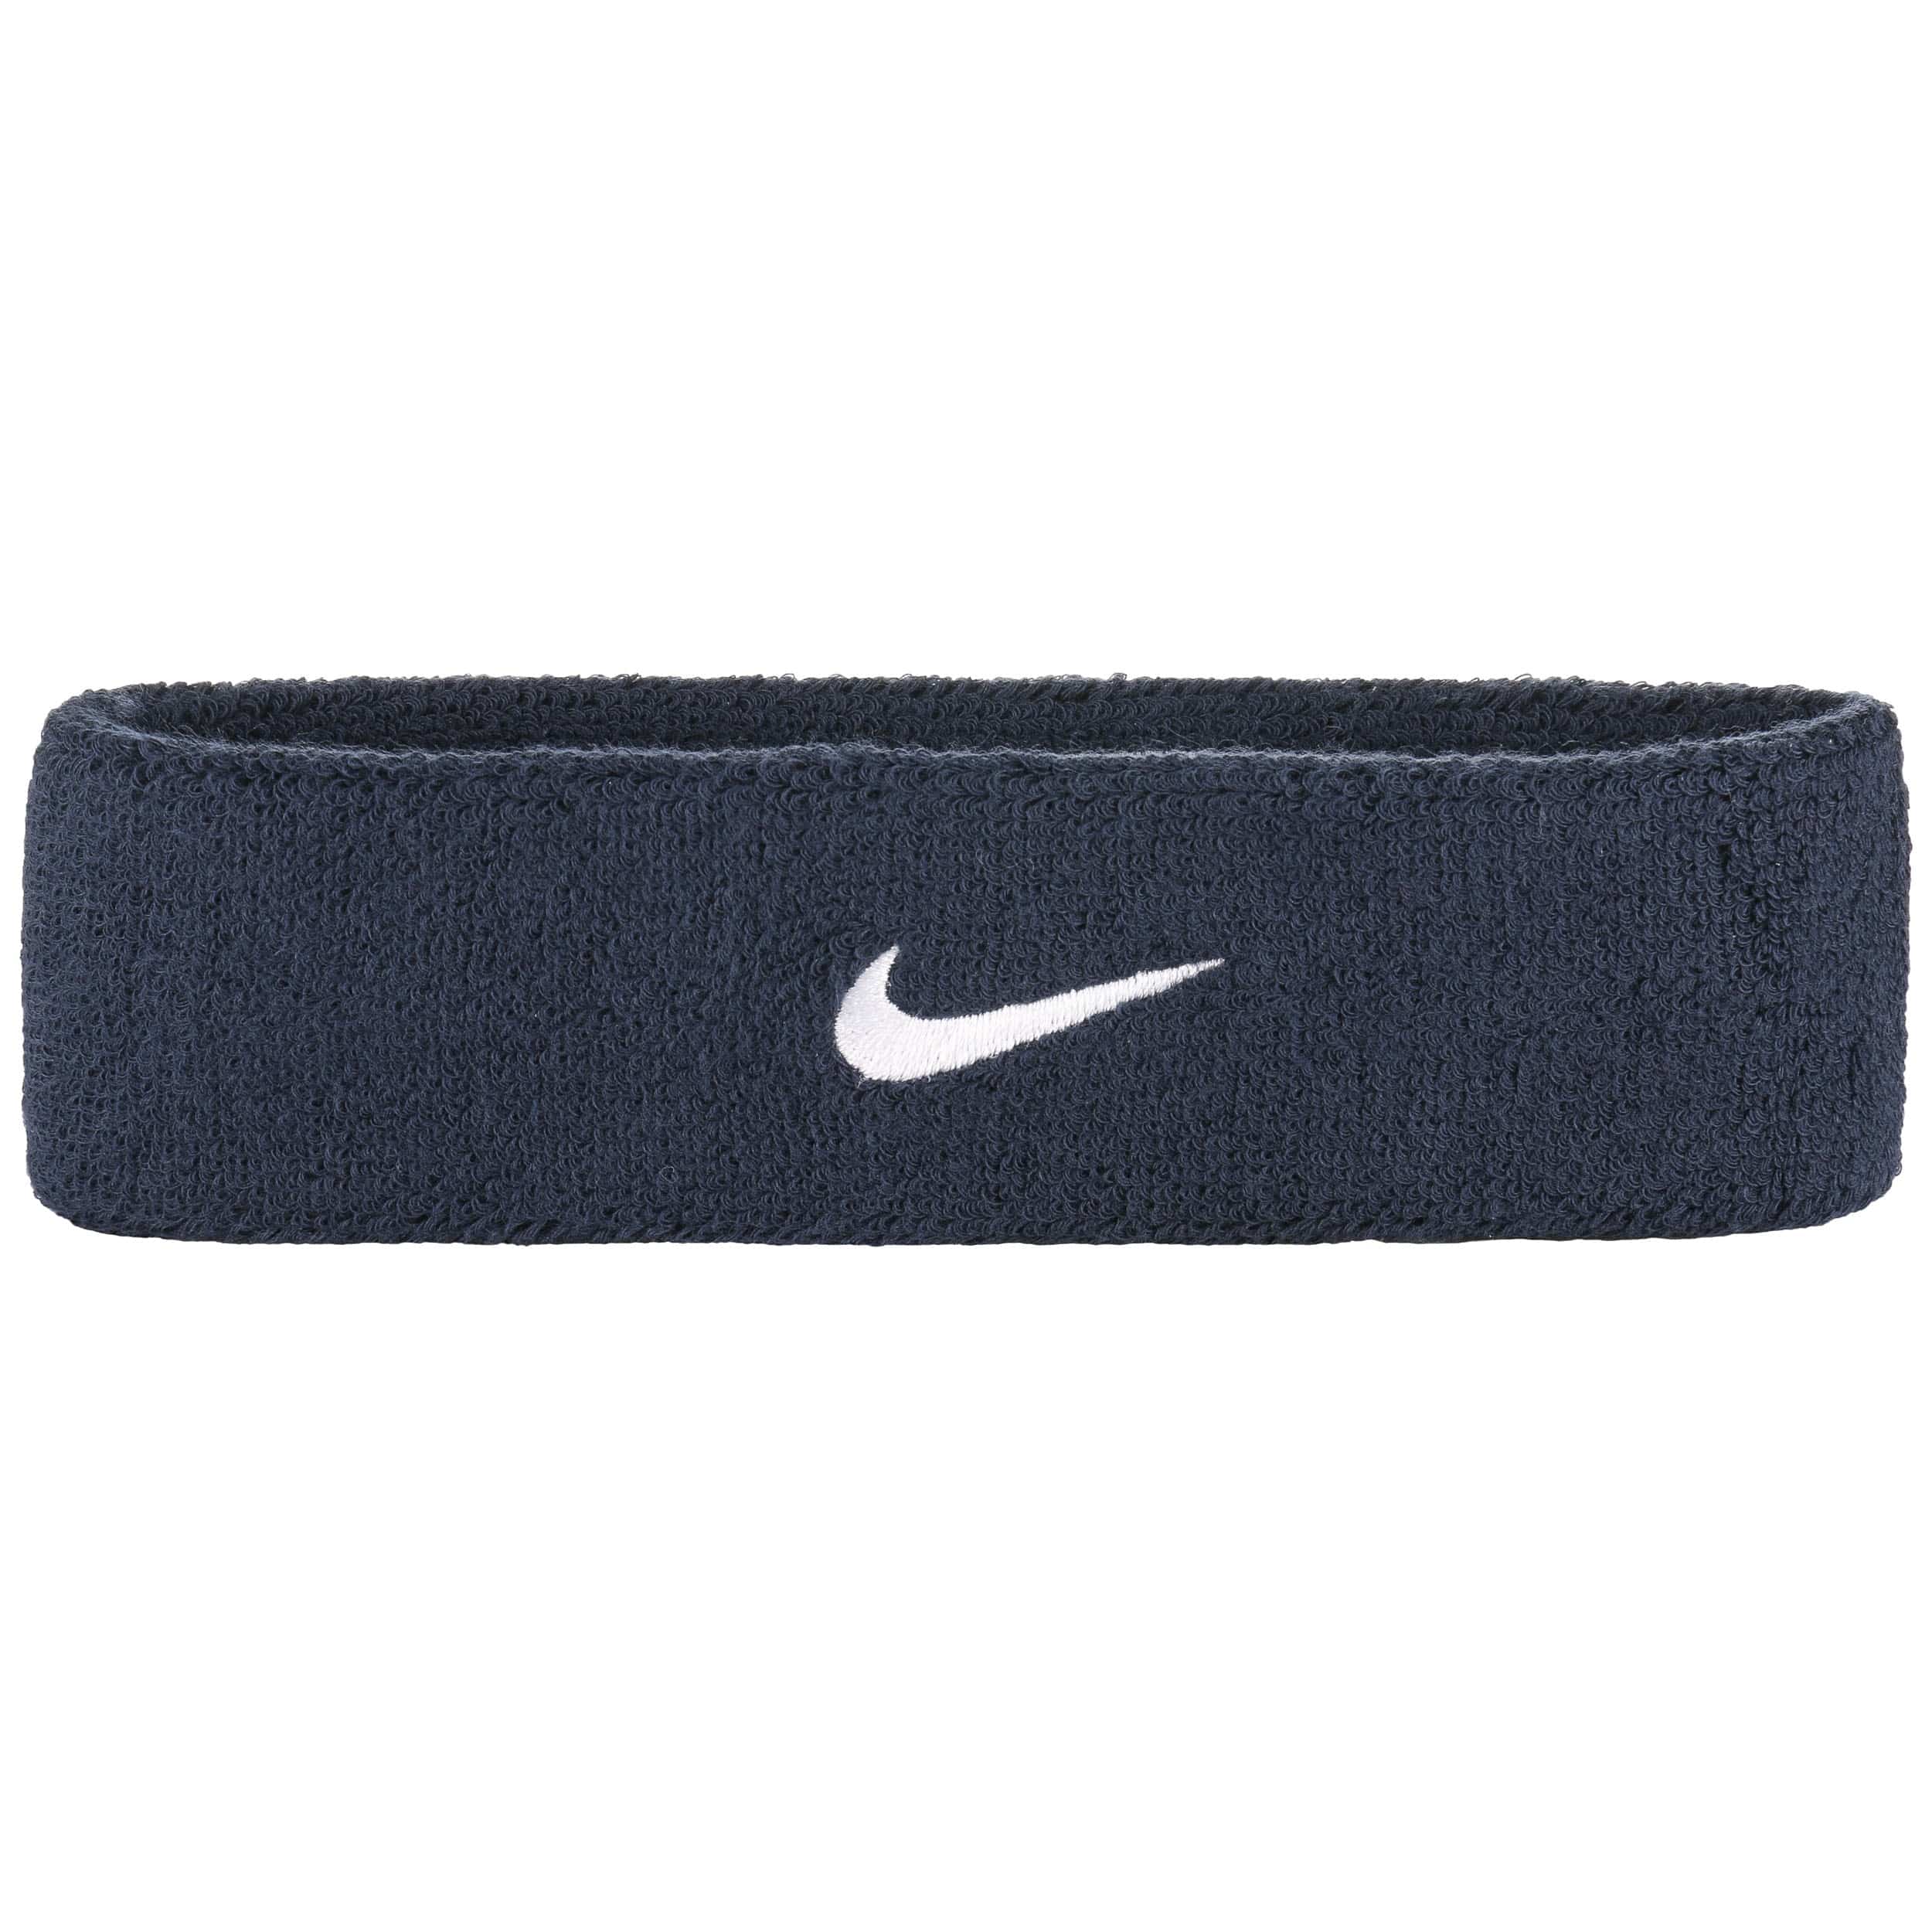 Резинка найк. Nike Swoosh Headband. Повязка Nike nnn071. Nike Swoosh Headband Black. Повязка Nike Swoosh.